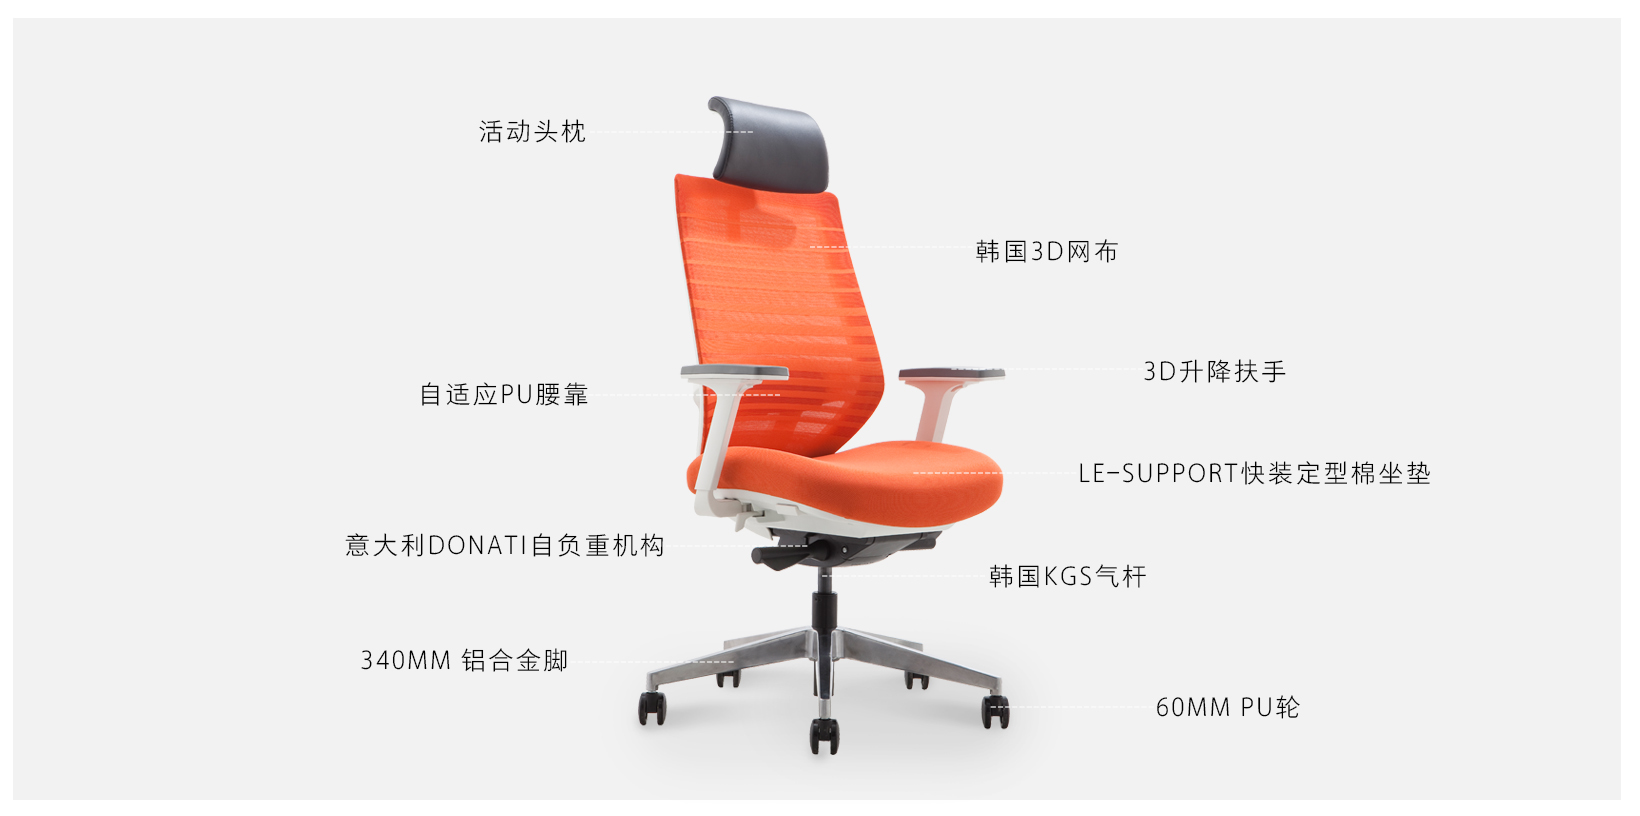 Efl 001a Foshan Sitzone Furniture Co Ltd